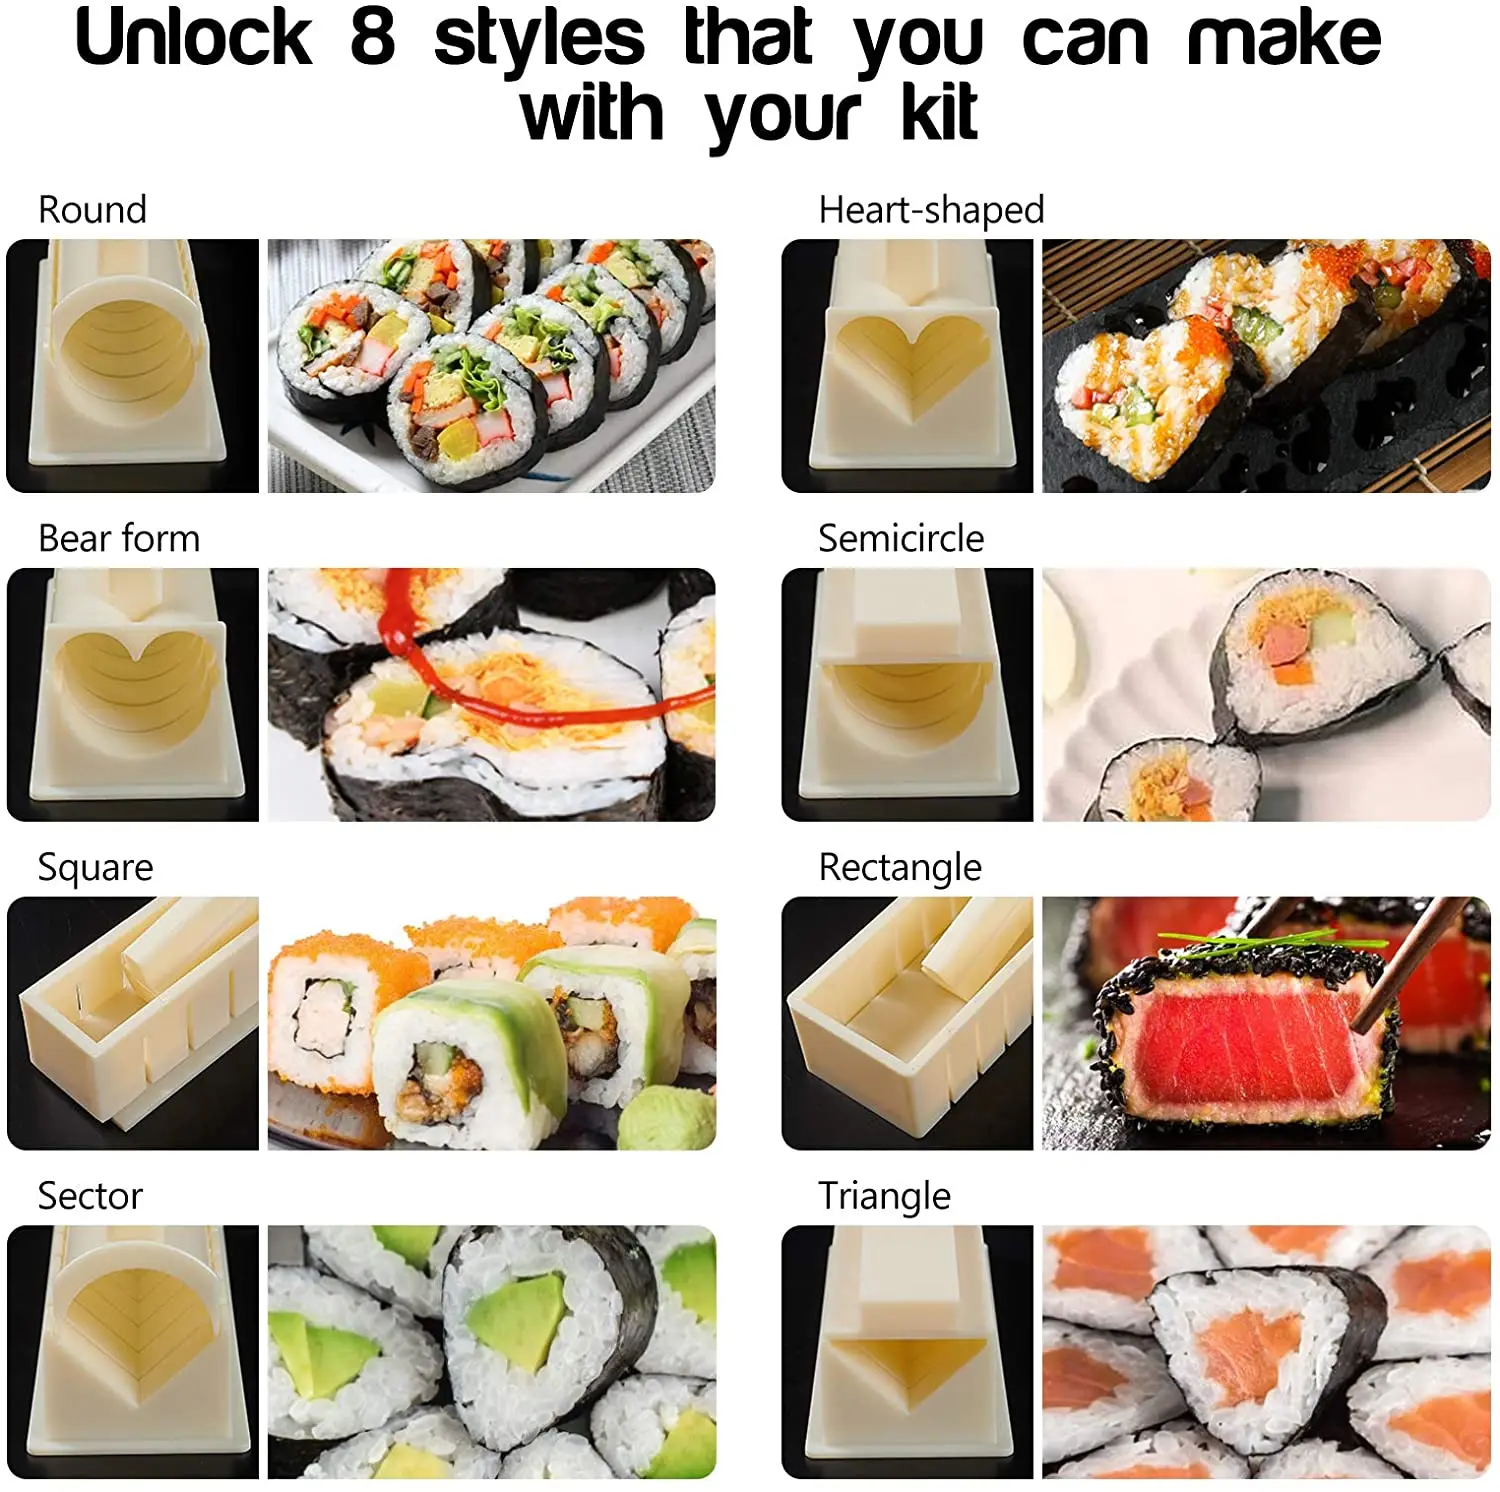 Sushi Making Kit (Custom) (Min Qty 10)